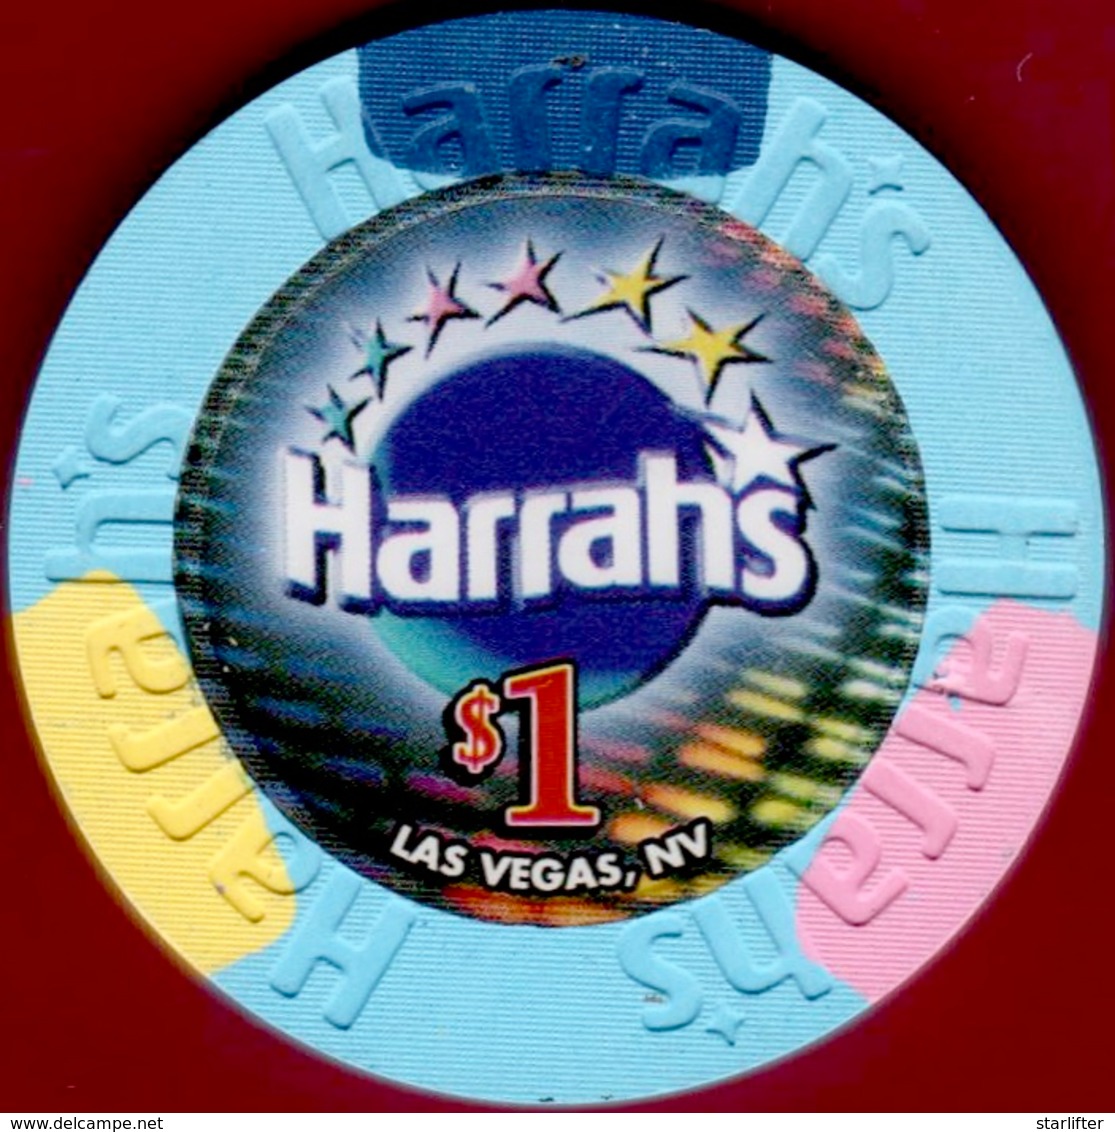 $1 Casino Chip. Harrahs, Las Vegas, NV. I09. - Casino